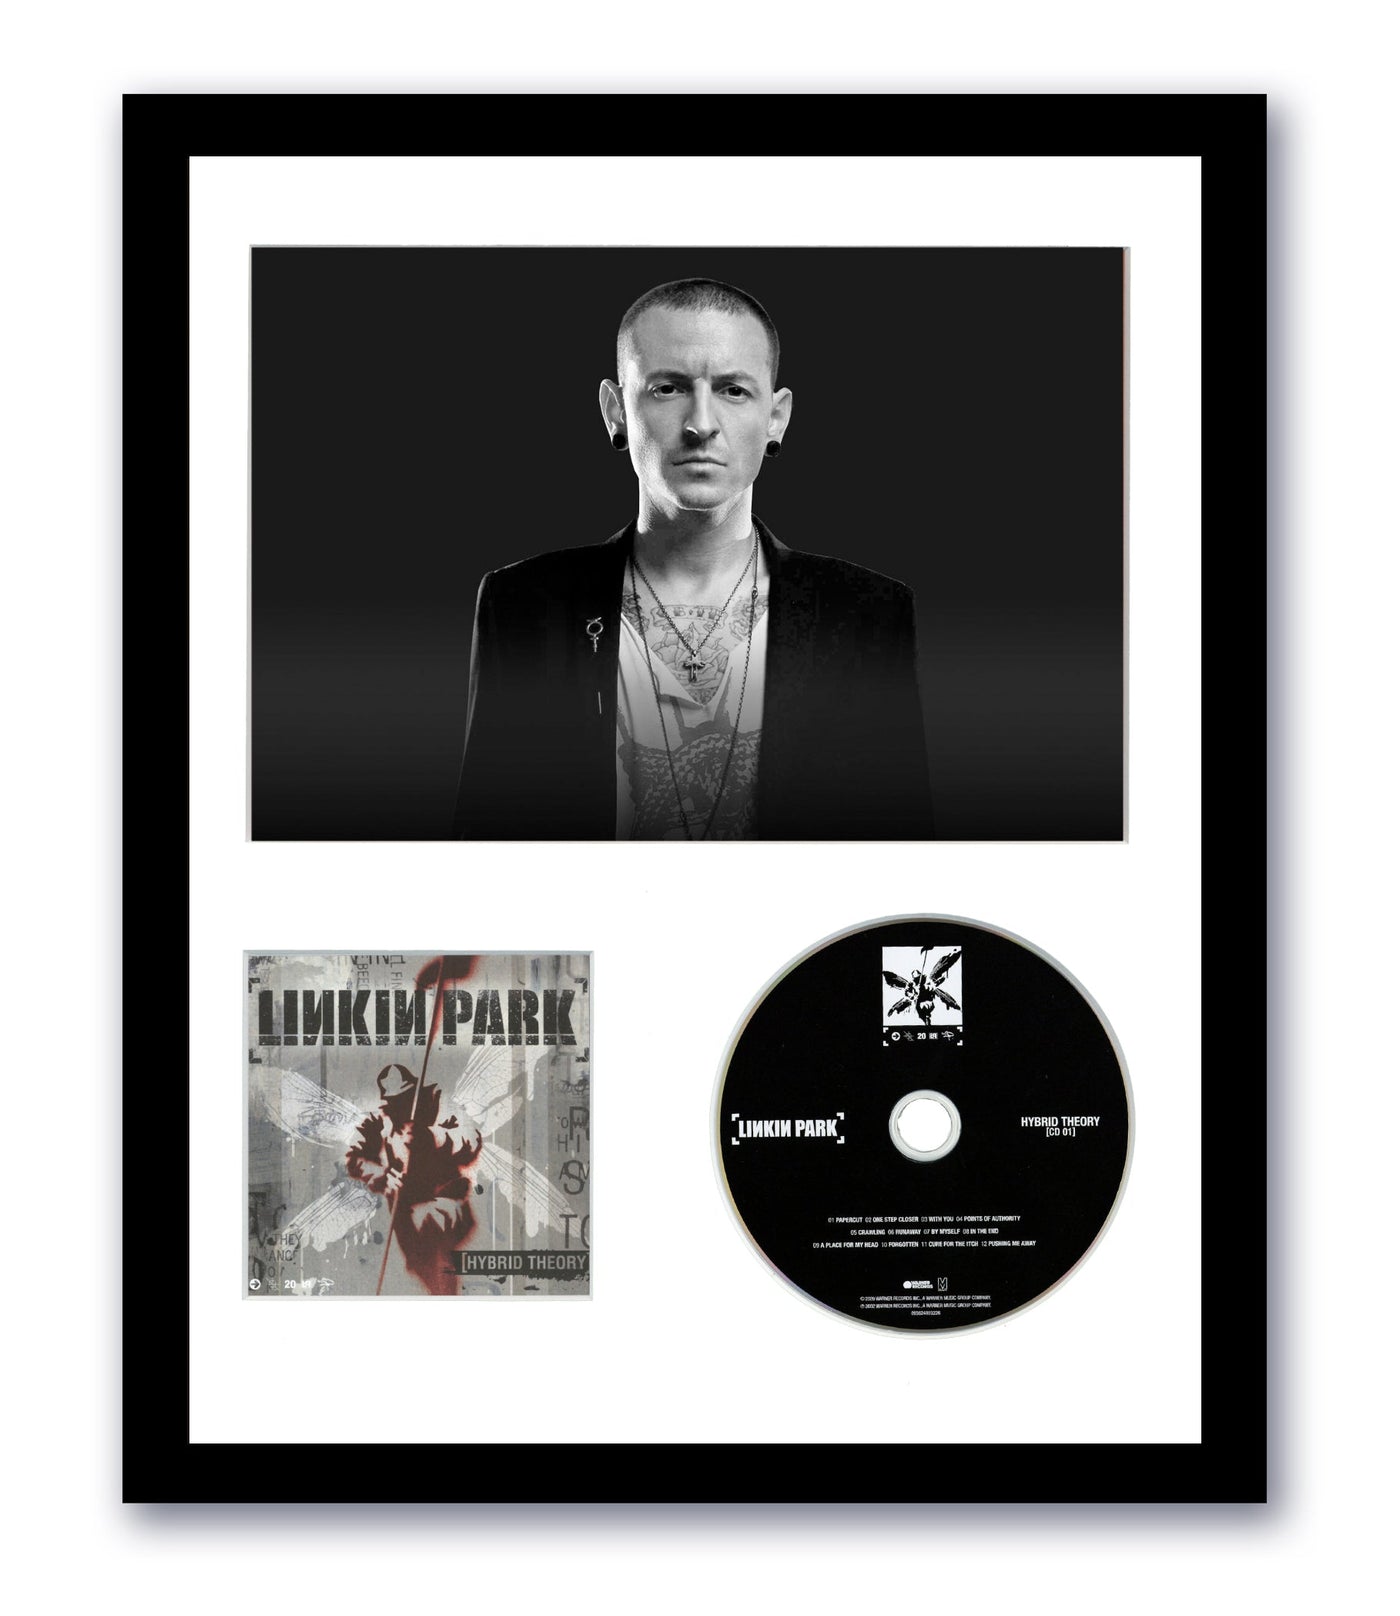 Linkin Park Custom Framed CD Photo Display Hybrid Theory Chester Bennington #2